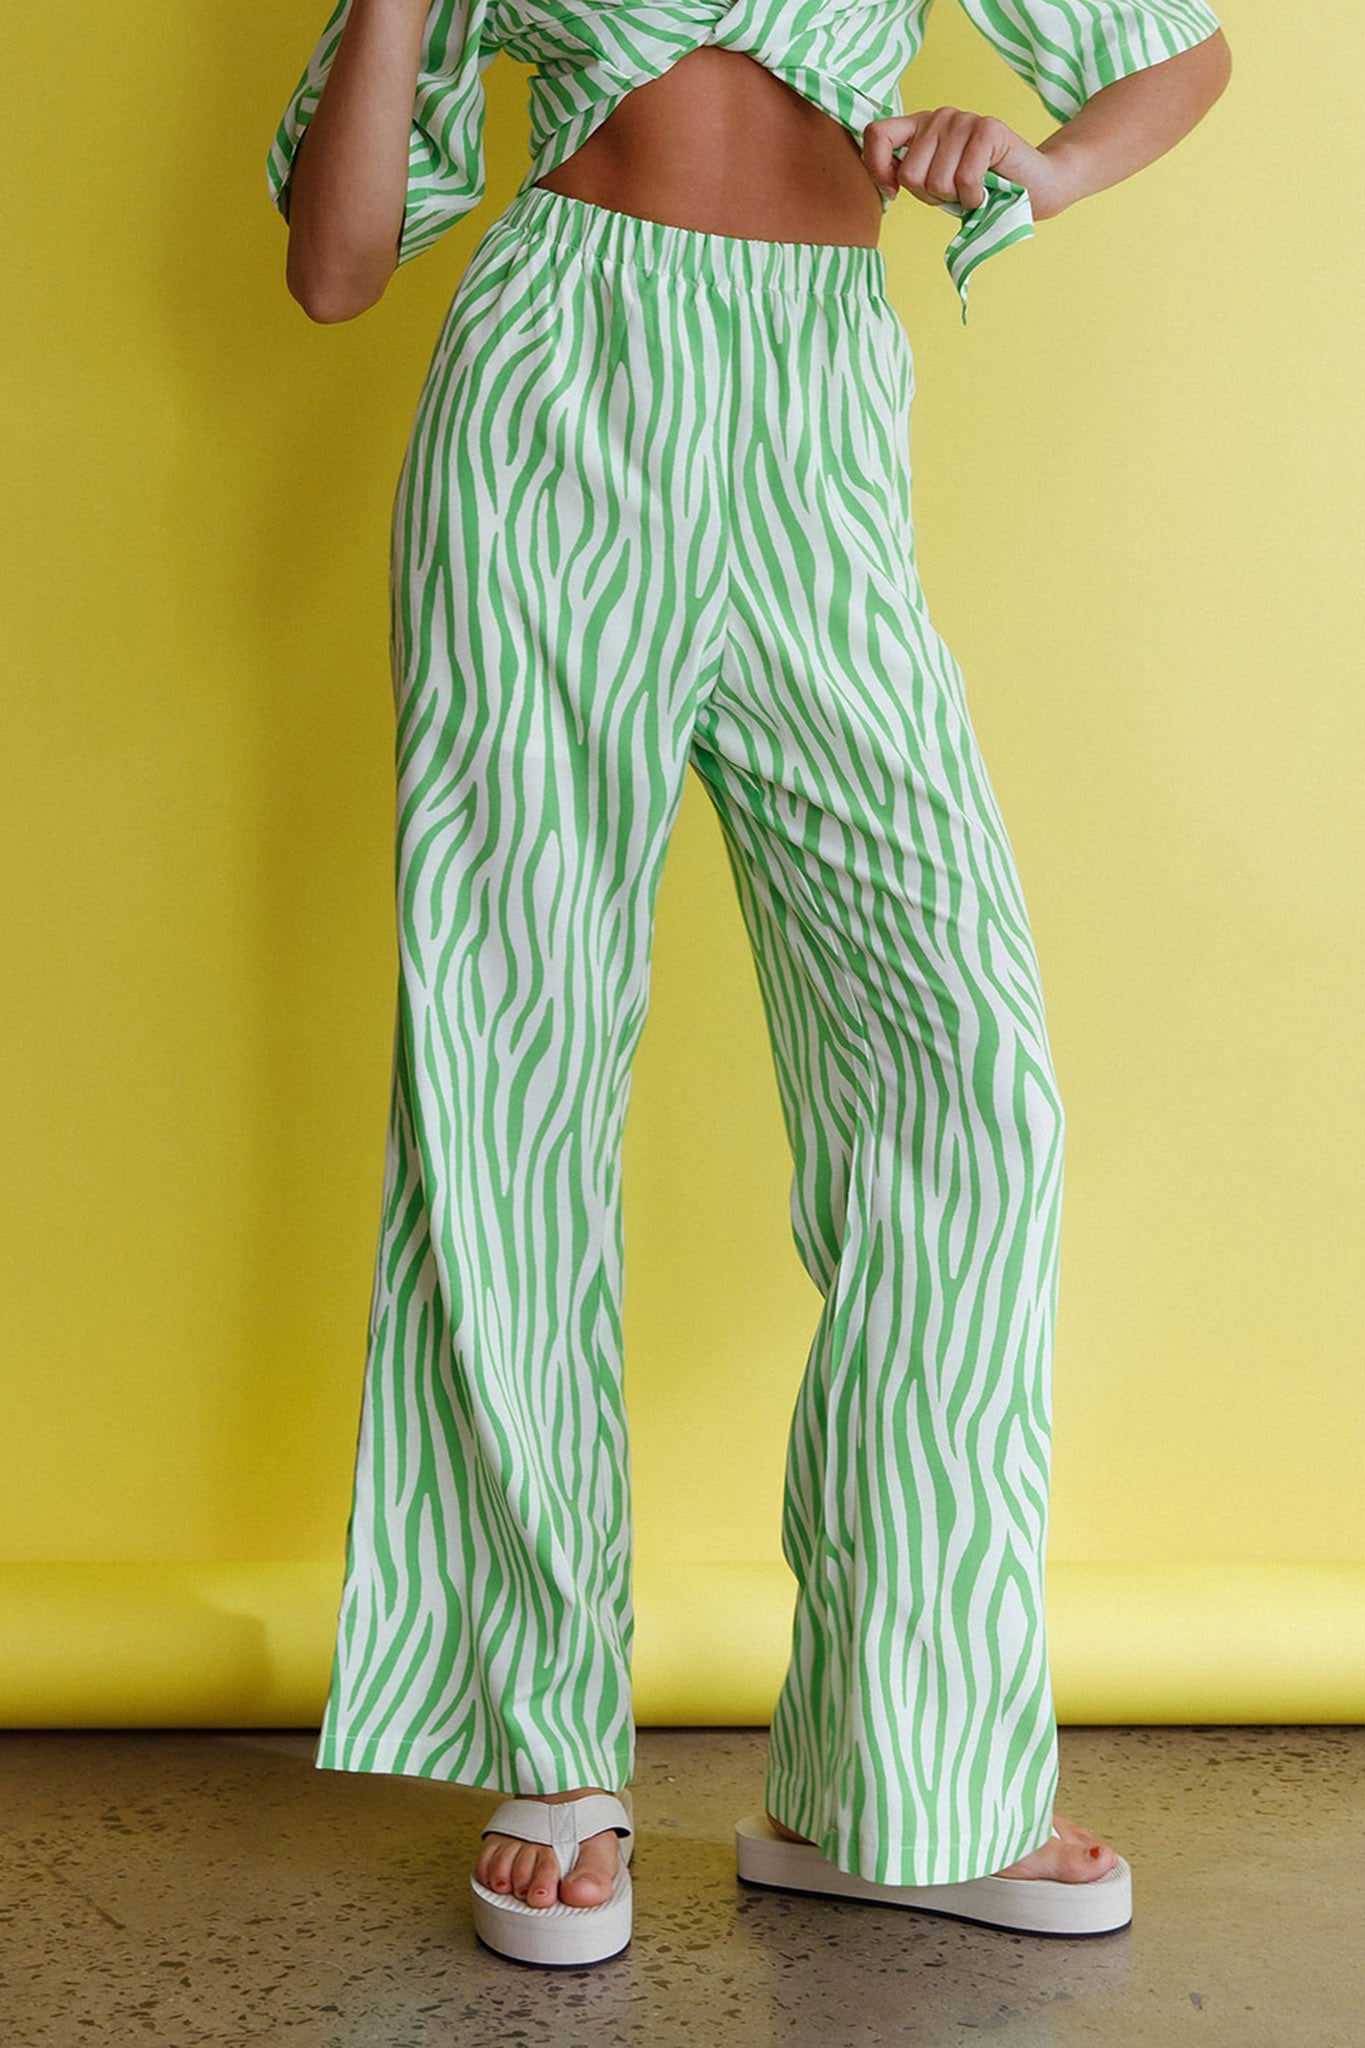 Shop the Just A Hunch Pants Zebra Green | Selfie Leslie